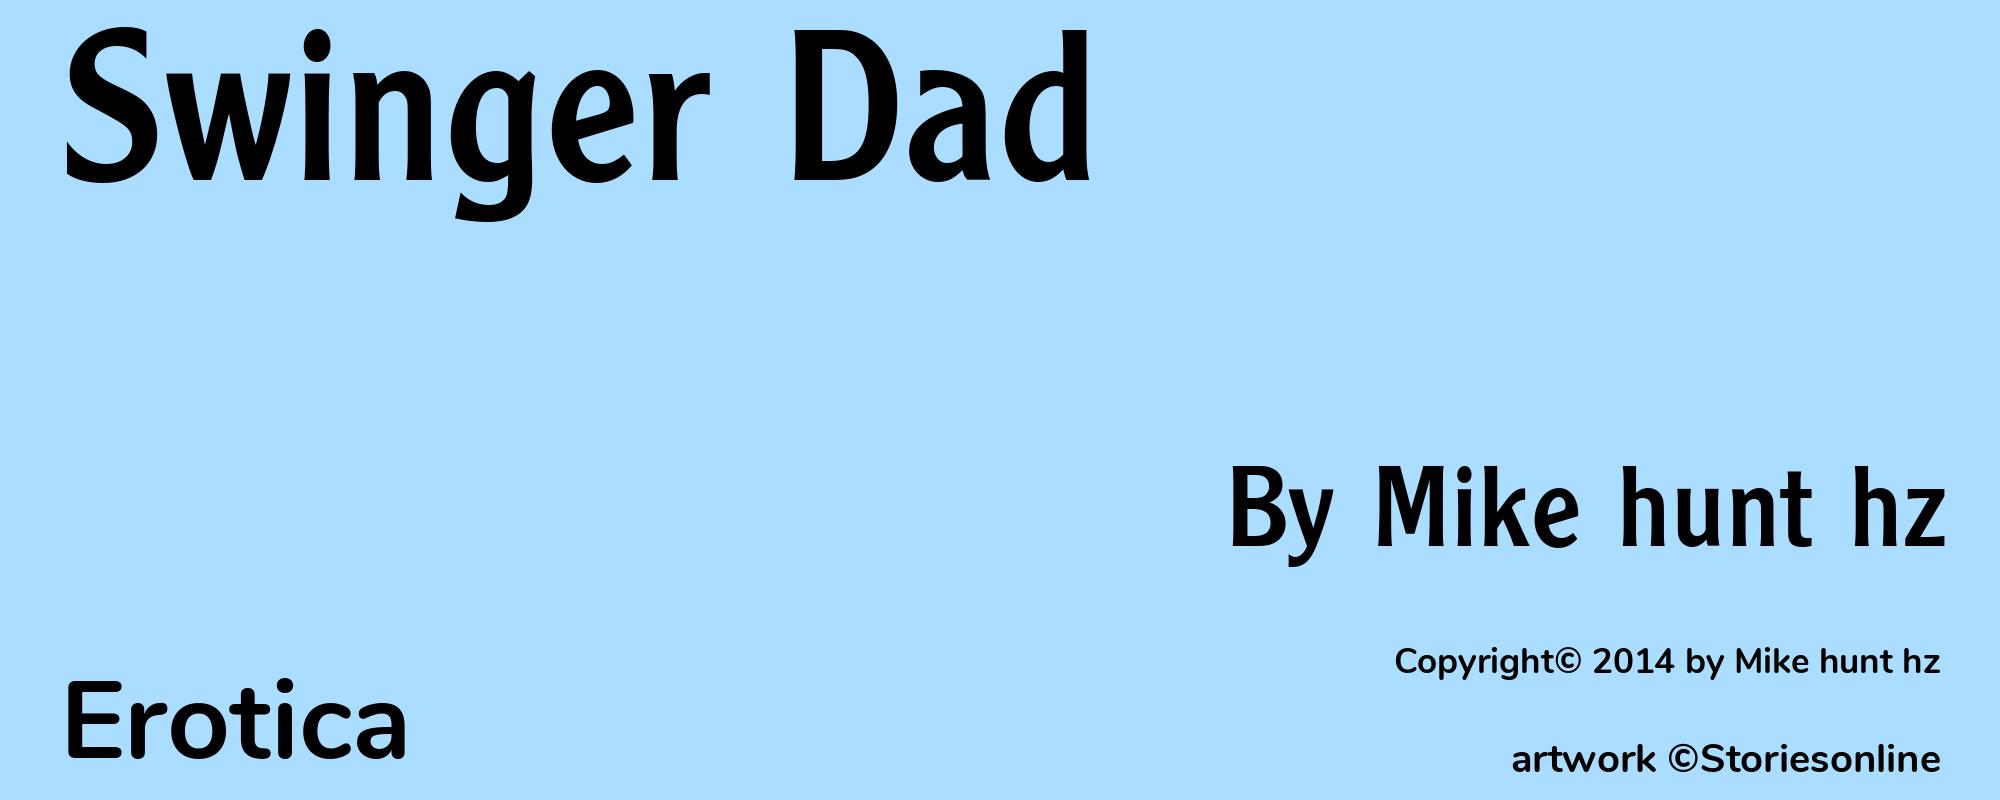 Swinger Dad - Cover